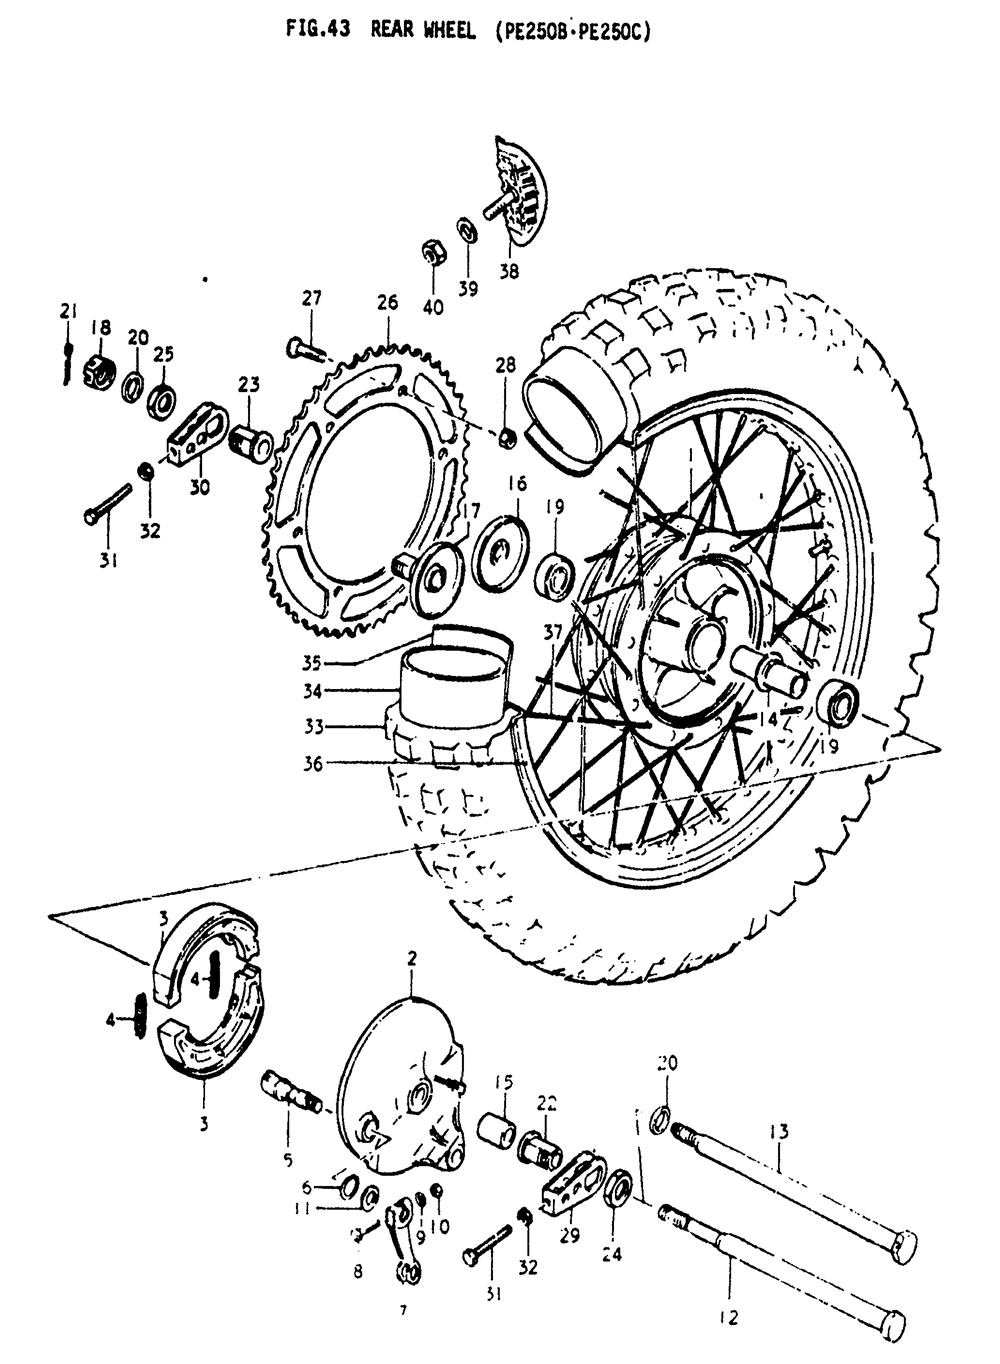 Rear wheel (pe250b .pe250c)